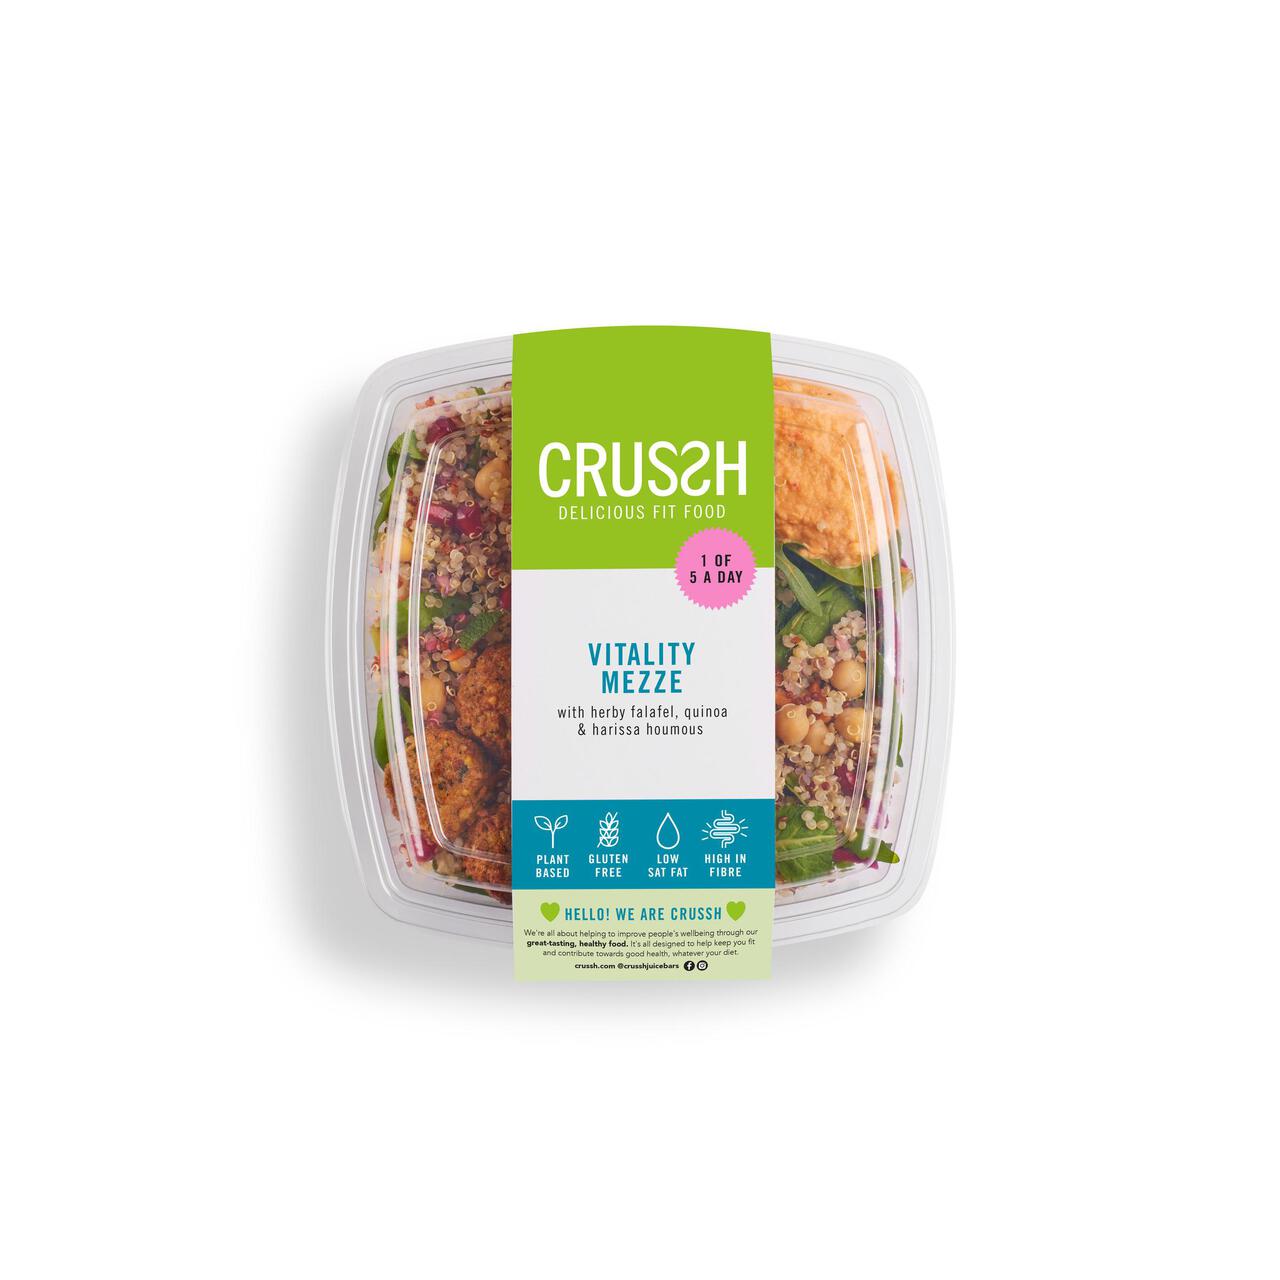 Crussh Vitality Mezze Salad Box 240g